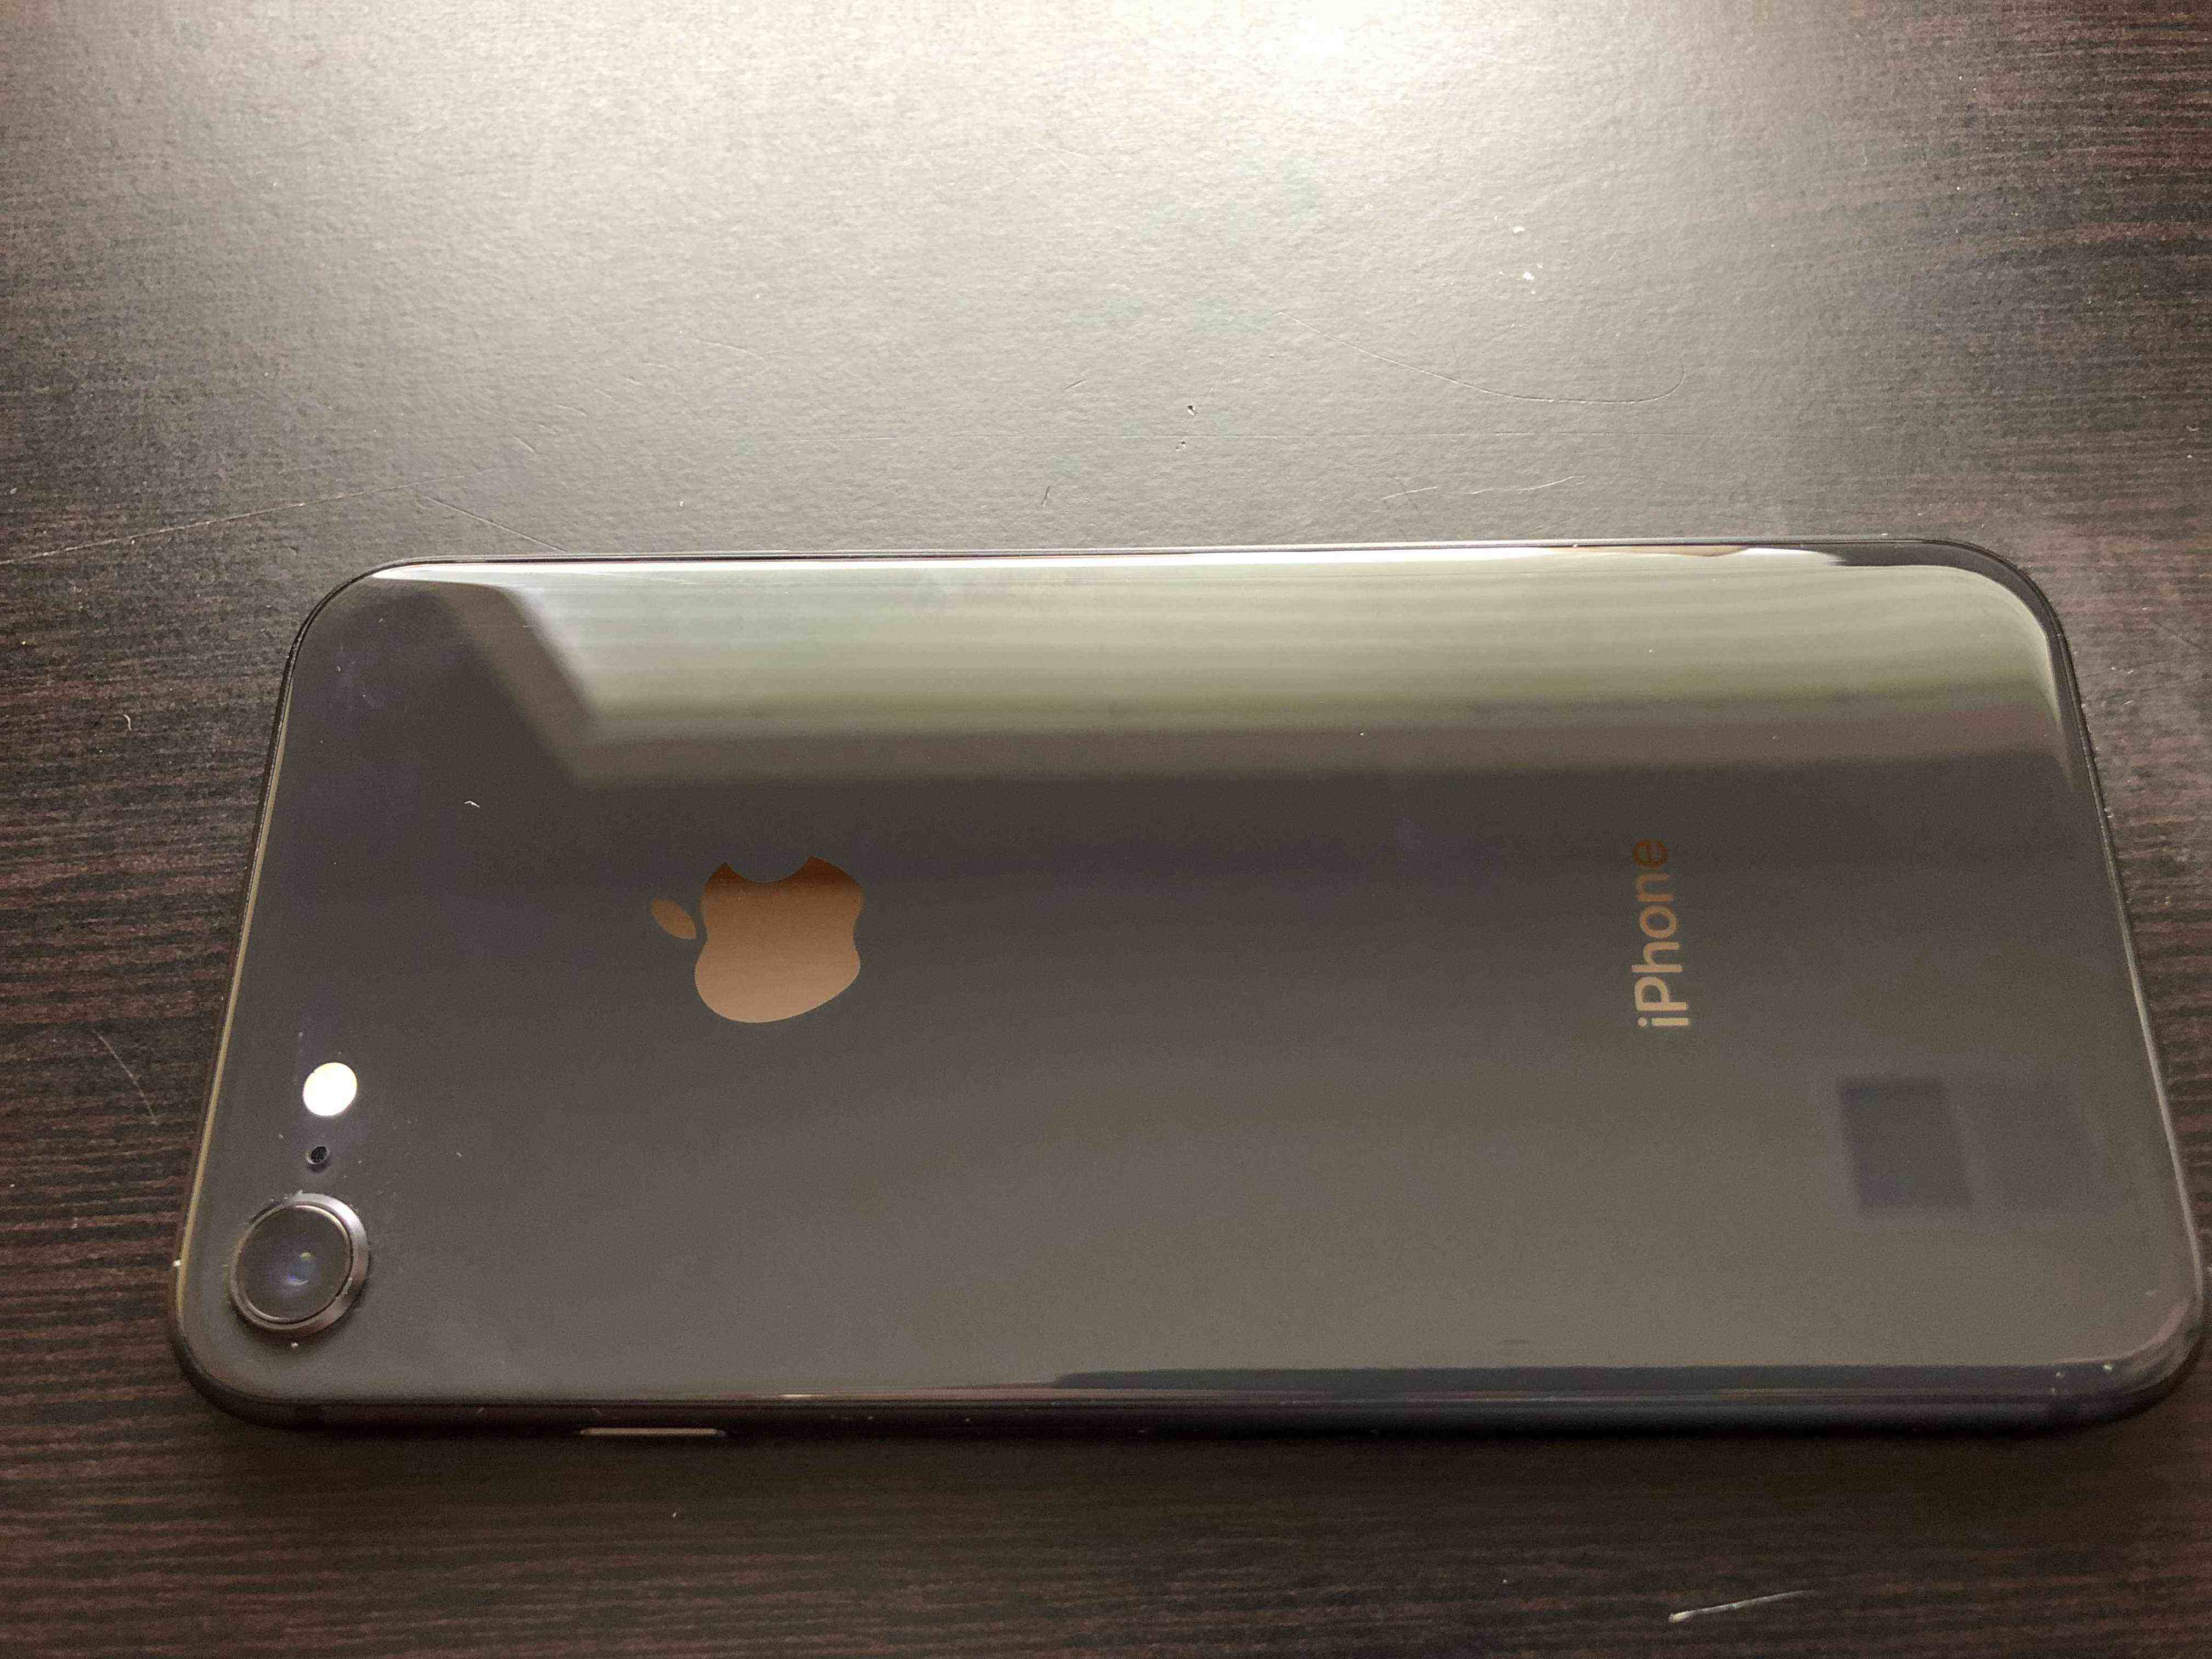 FS: iPhone 8 Space Gray 256GB Verizon (Unlocked) Warranty For Sale